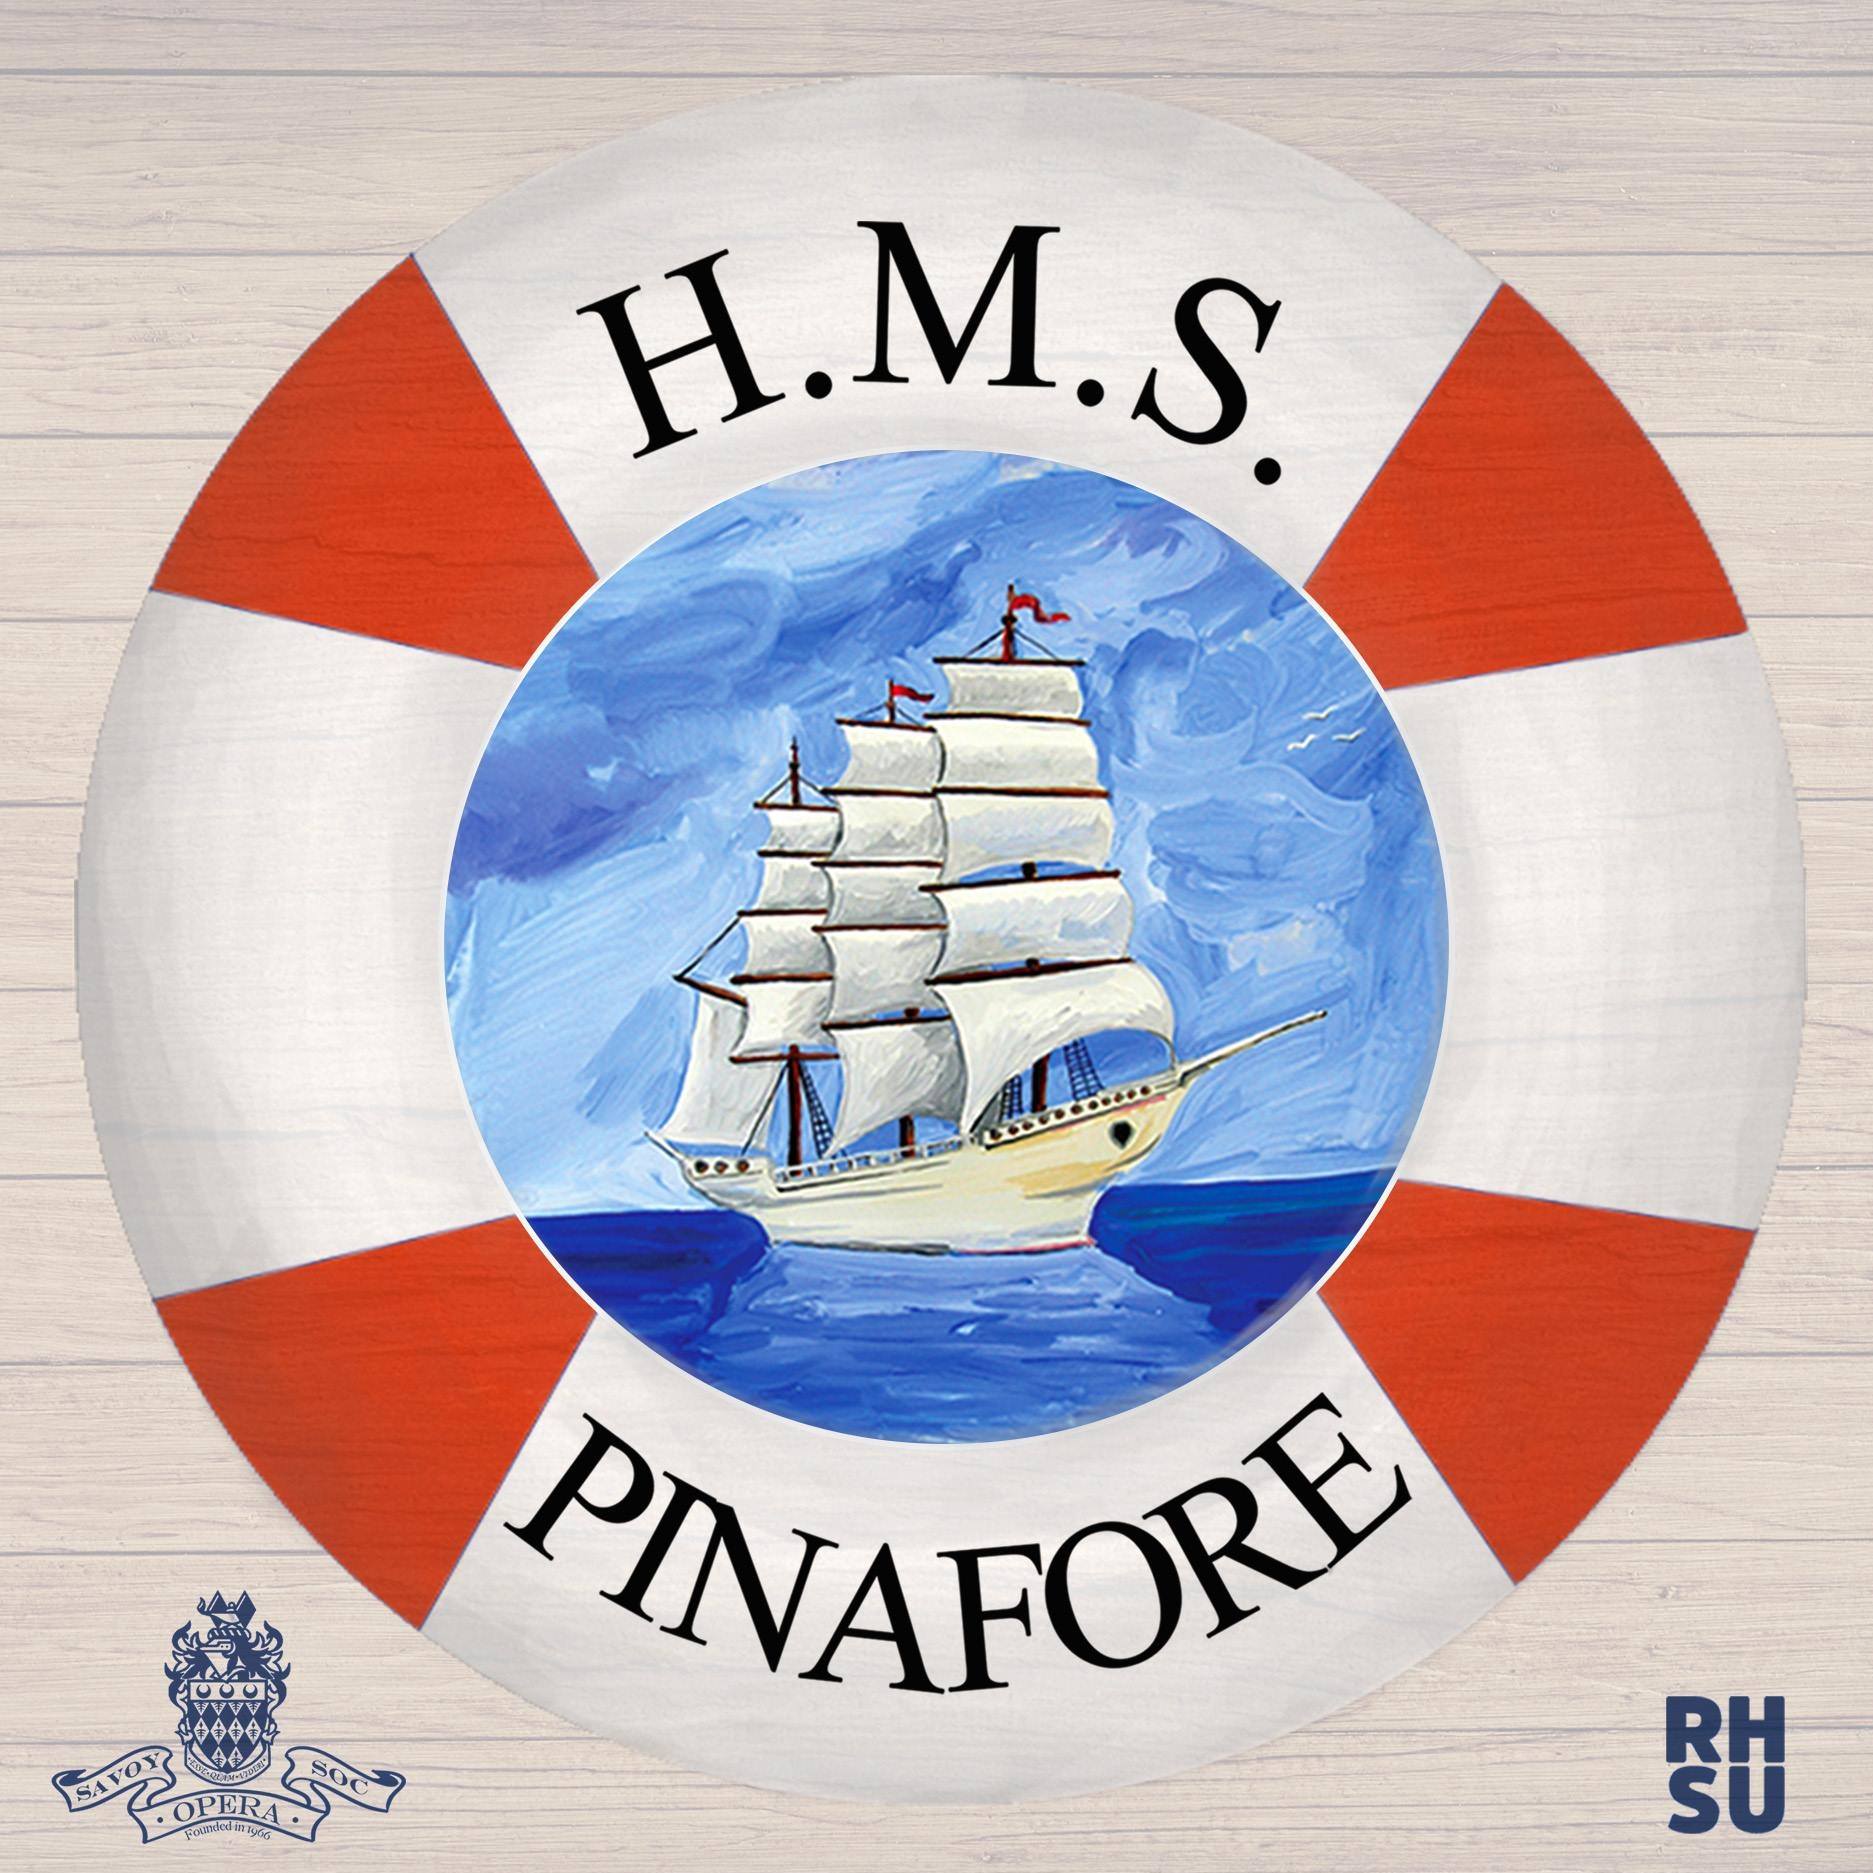 Setting sail with HMS Pinafore